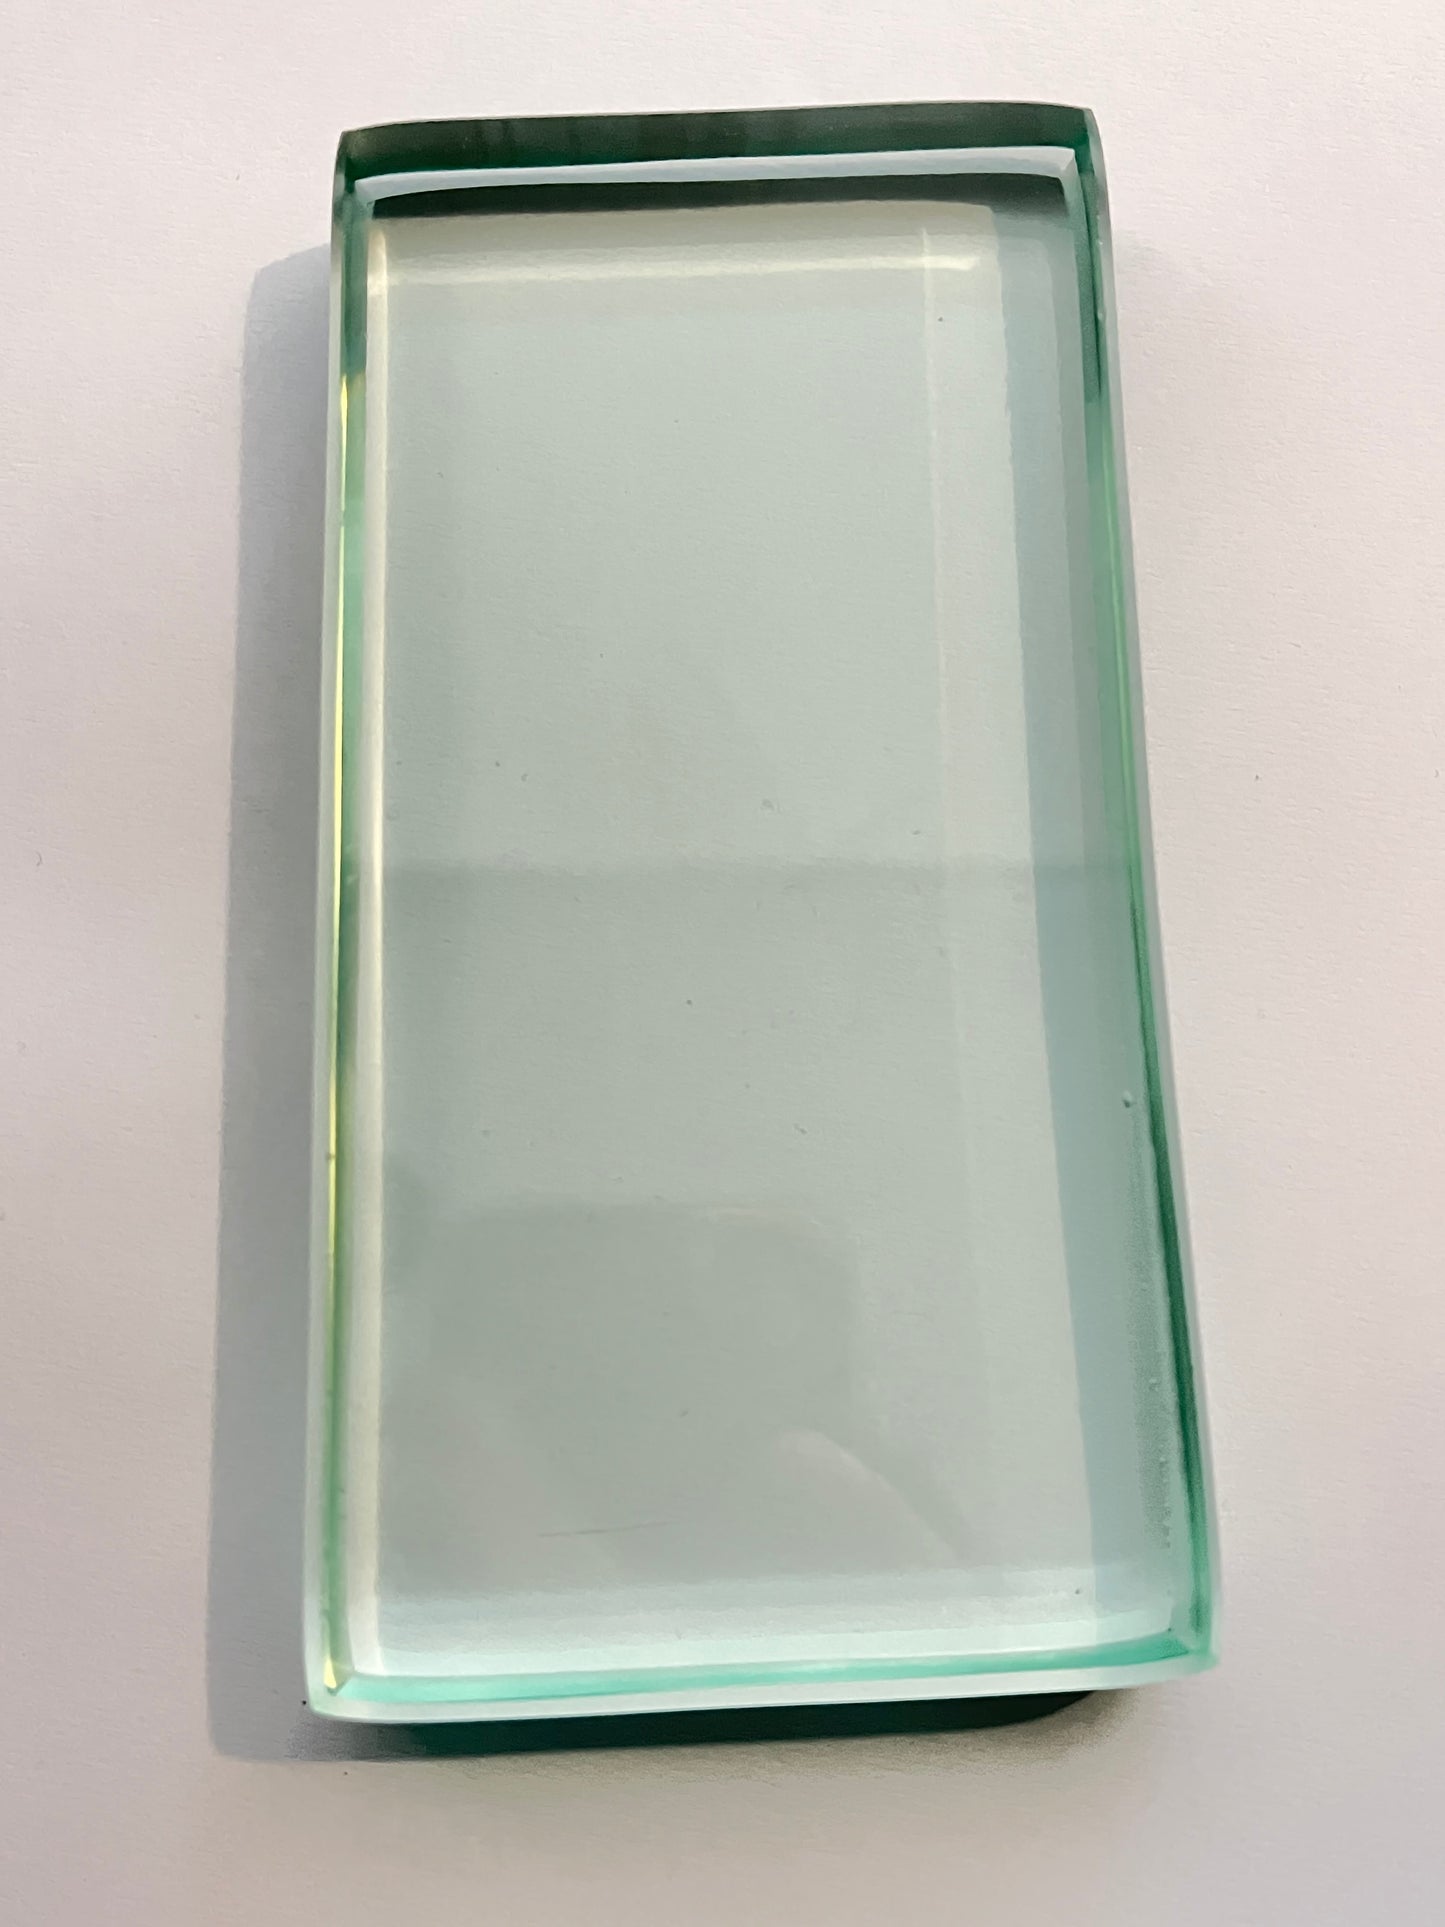 Loseta de vidrio .19mm rectangular medidas 8x15cm